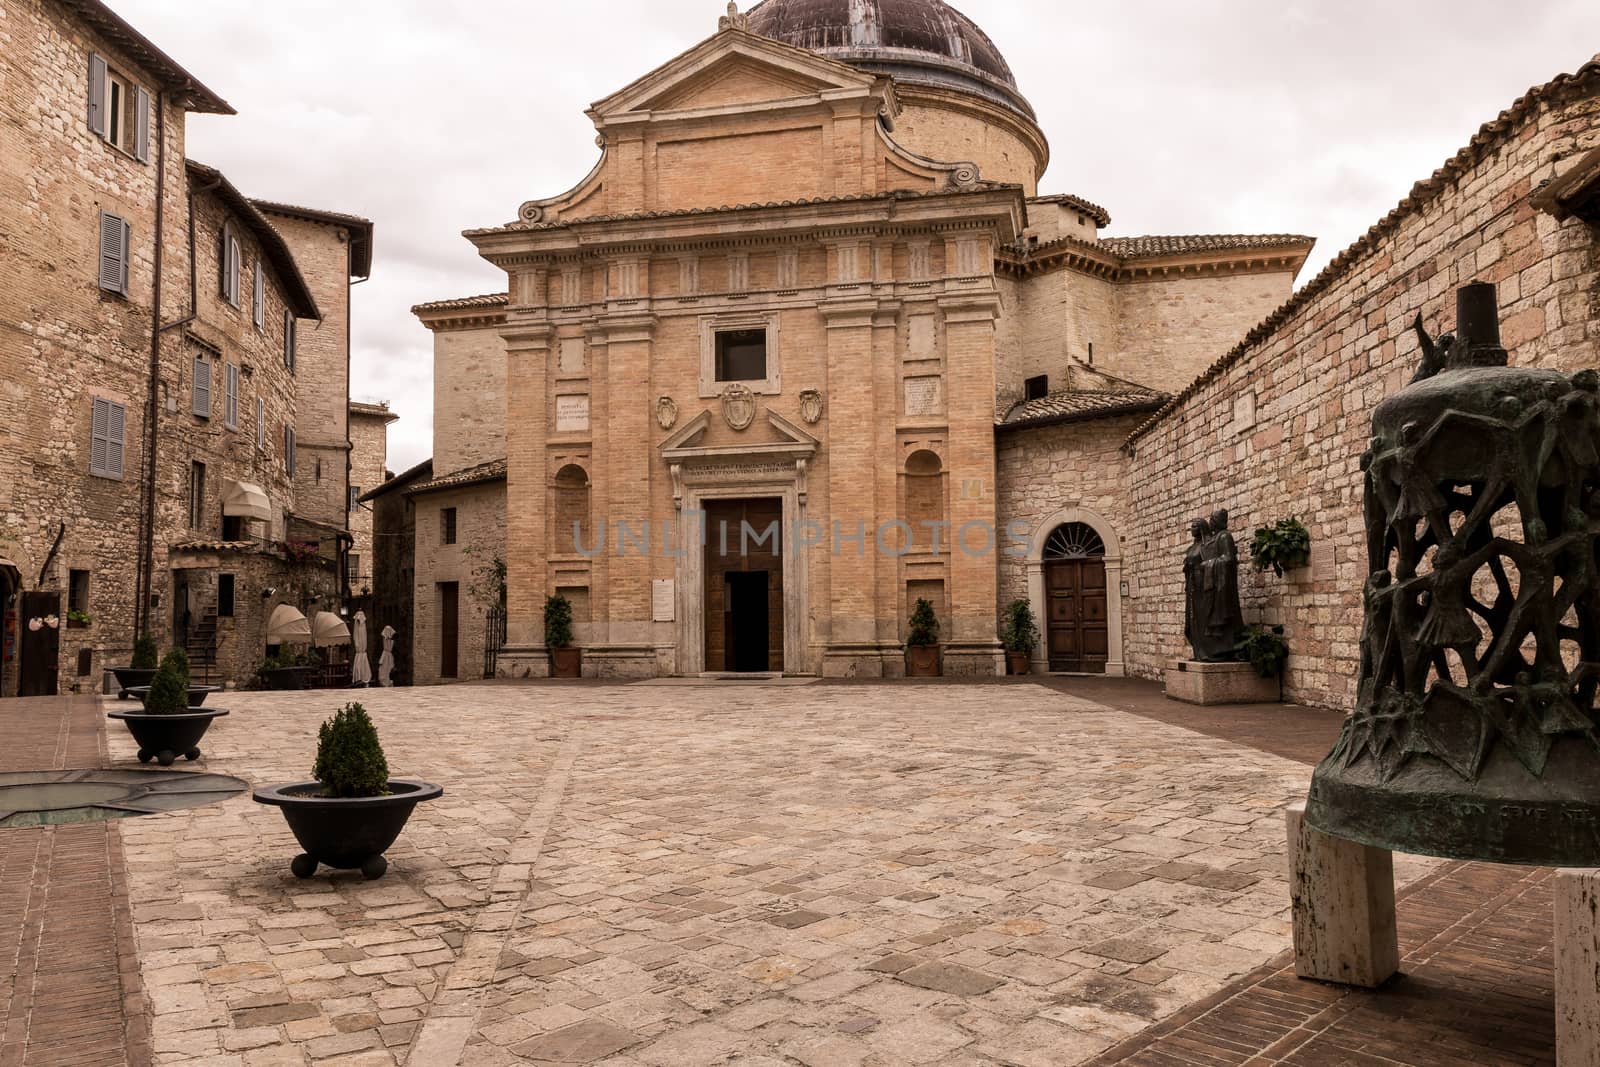 View of Chiesa Nuova by alanstix64